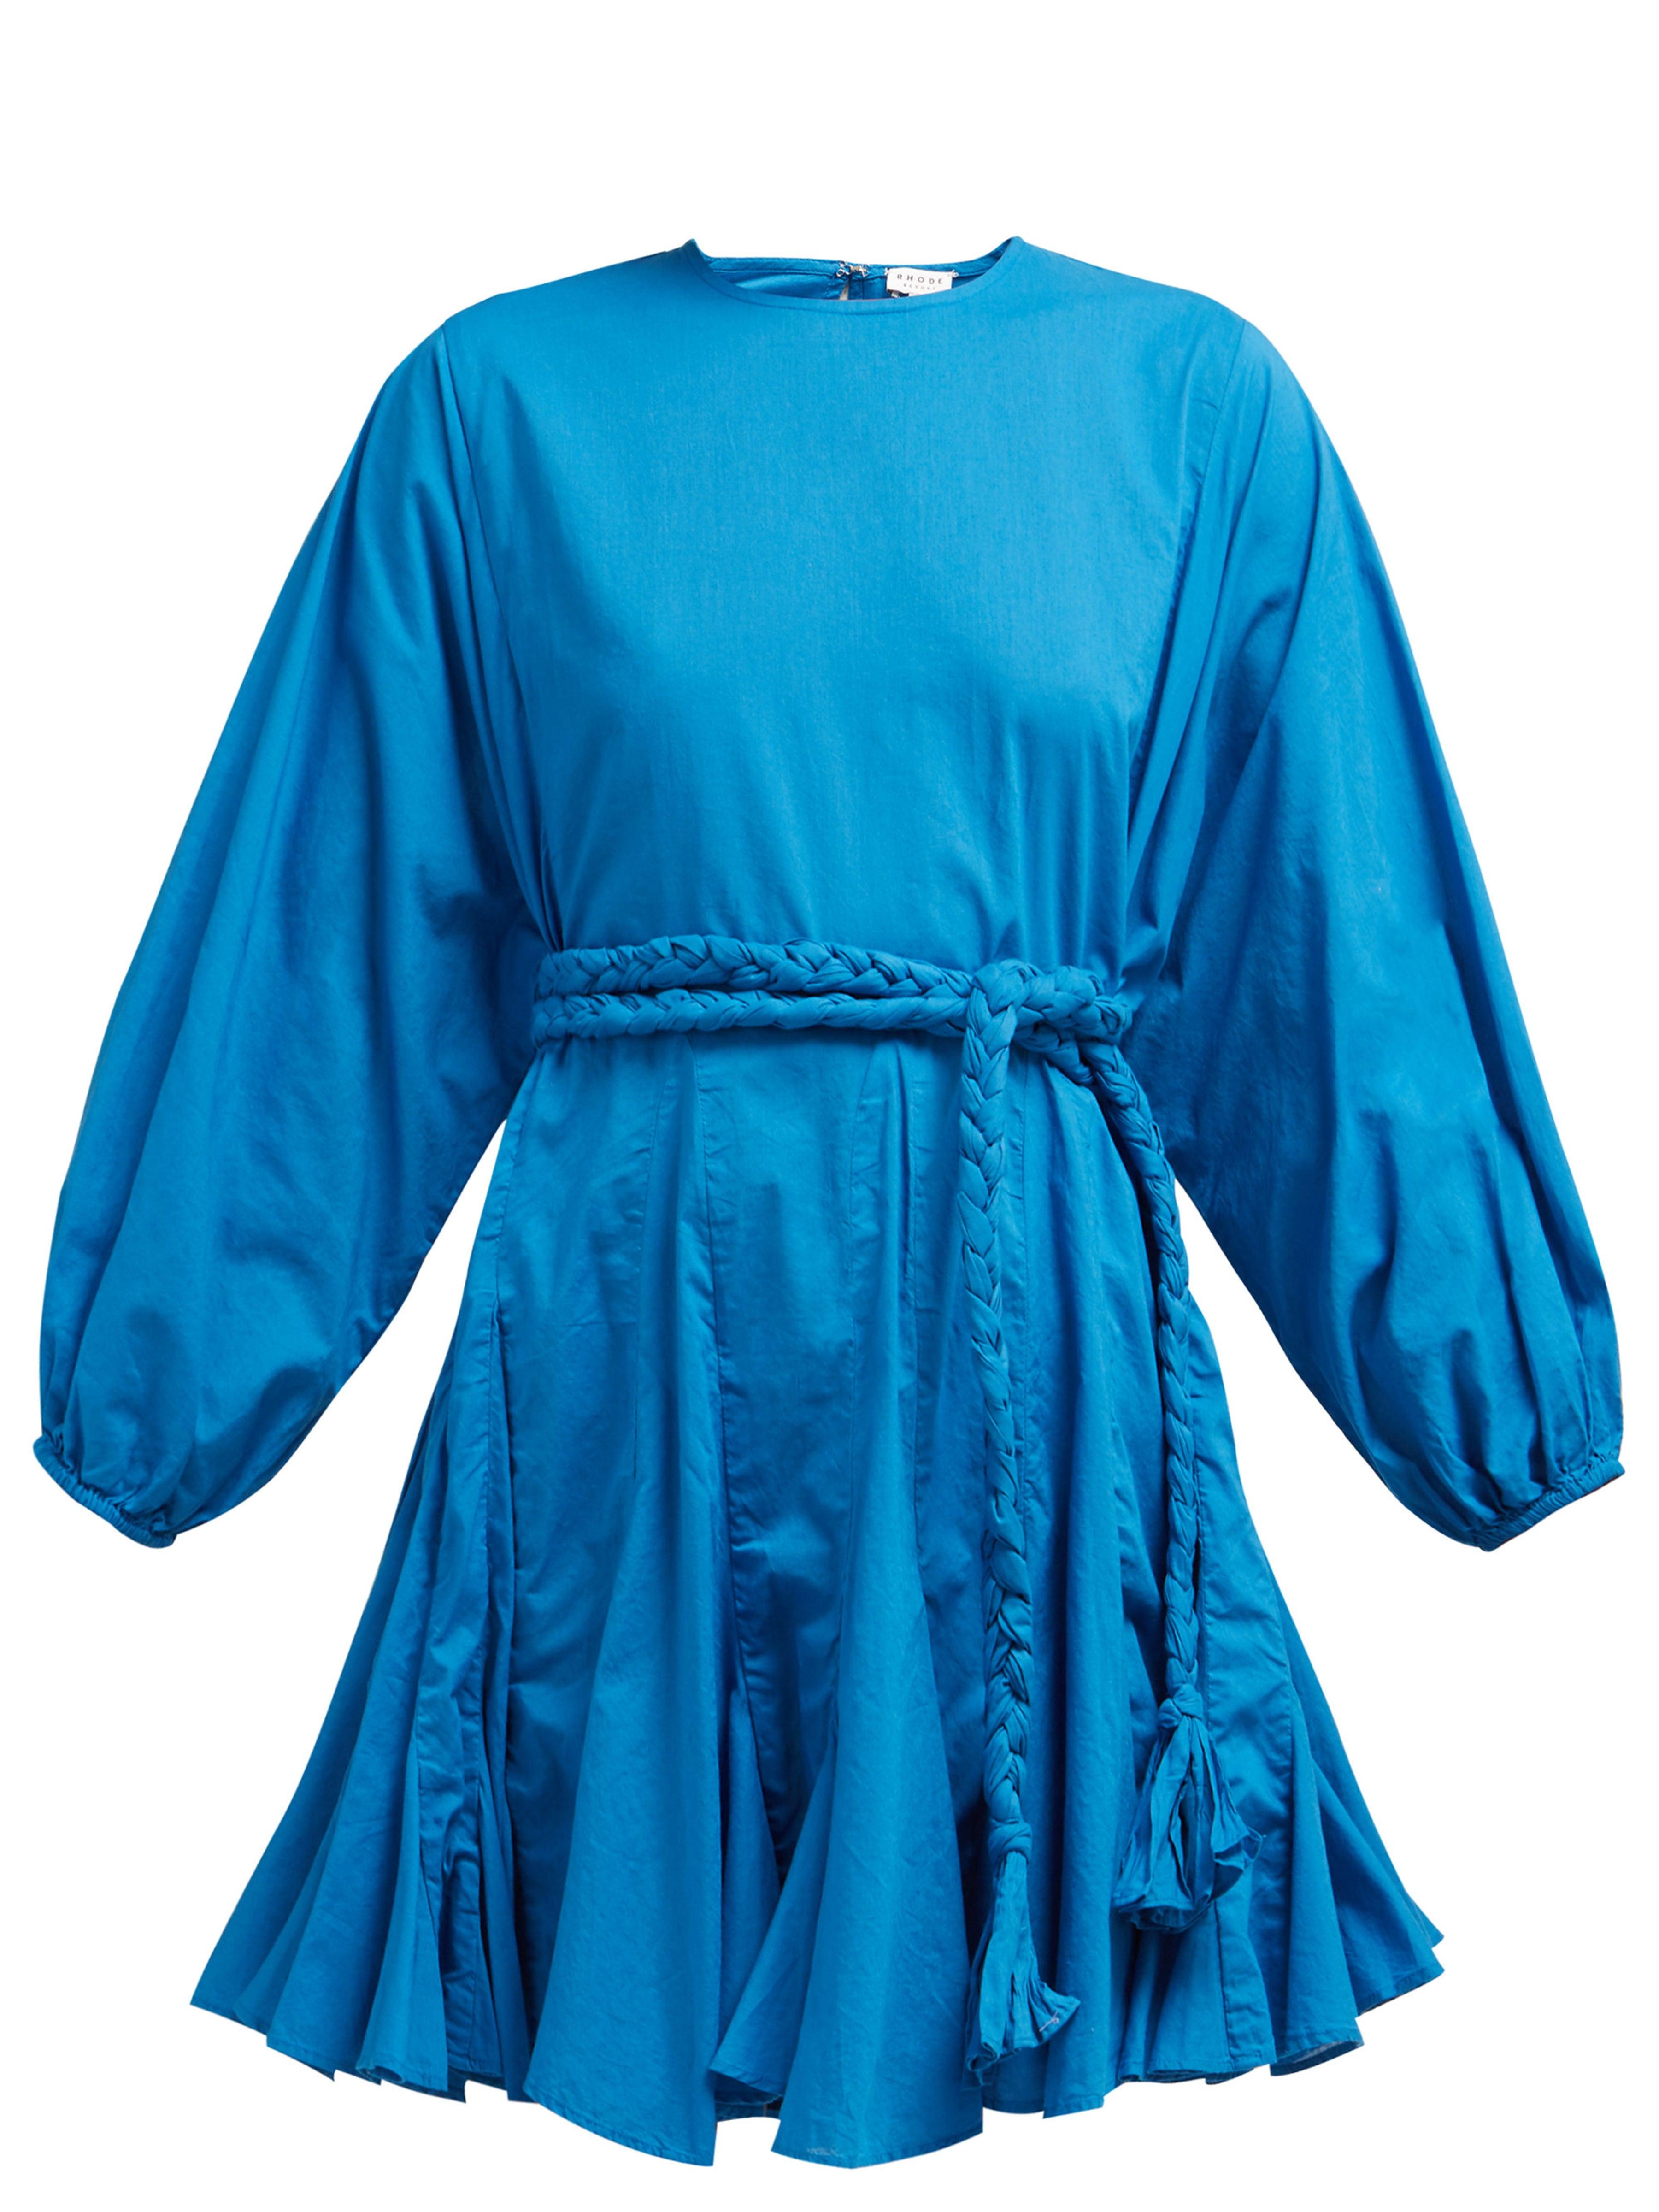 RHODE Ella Cotton Dress in Blue - Lyst